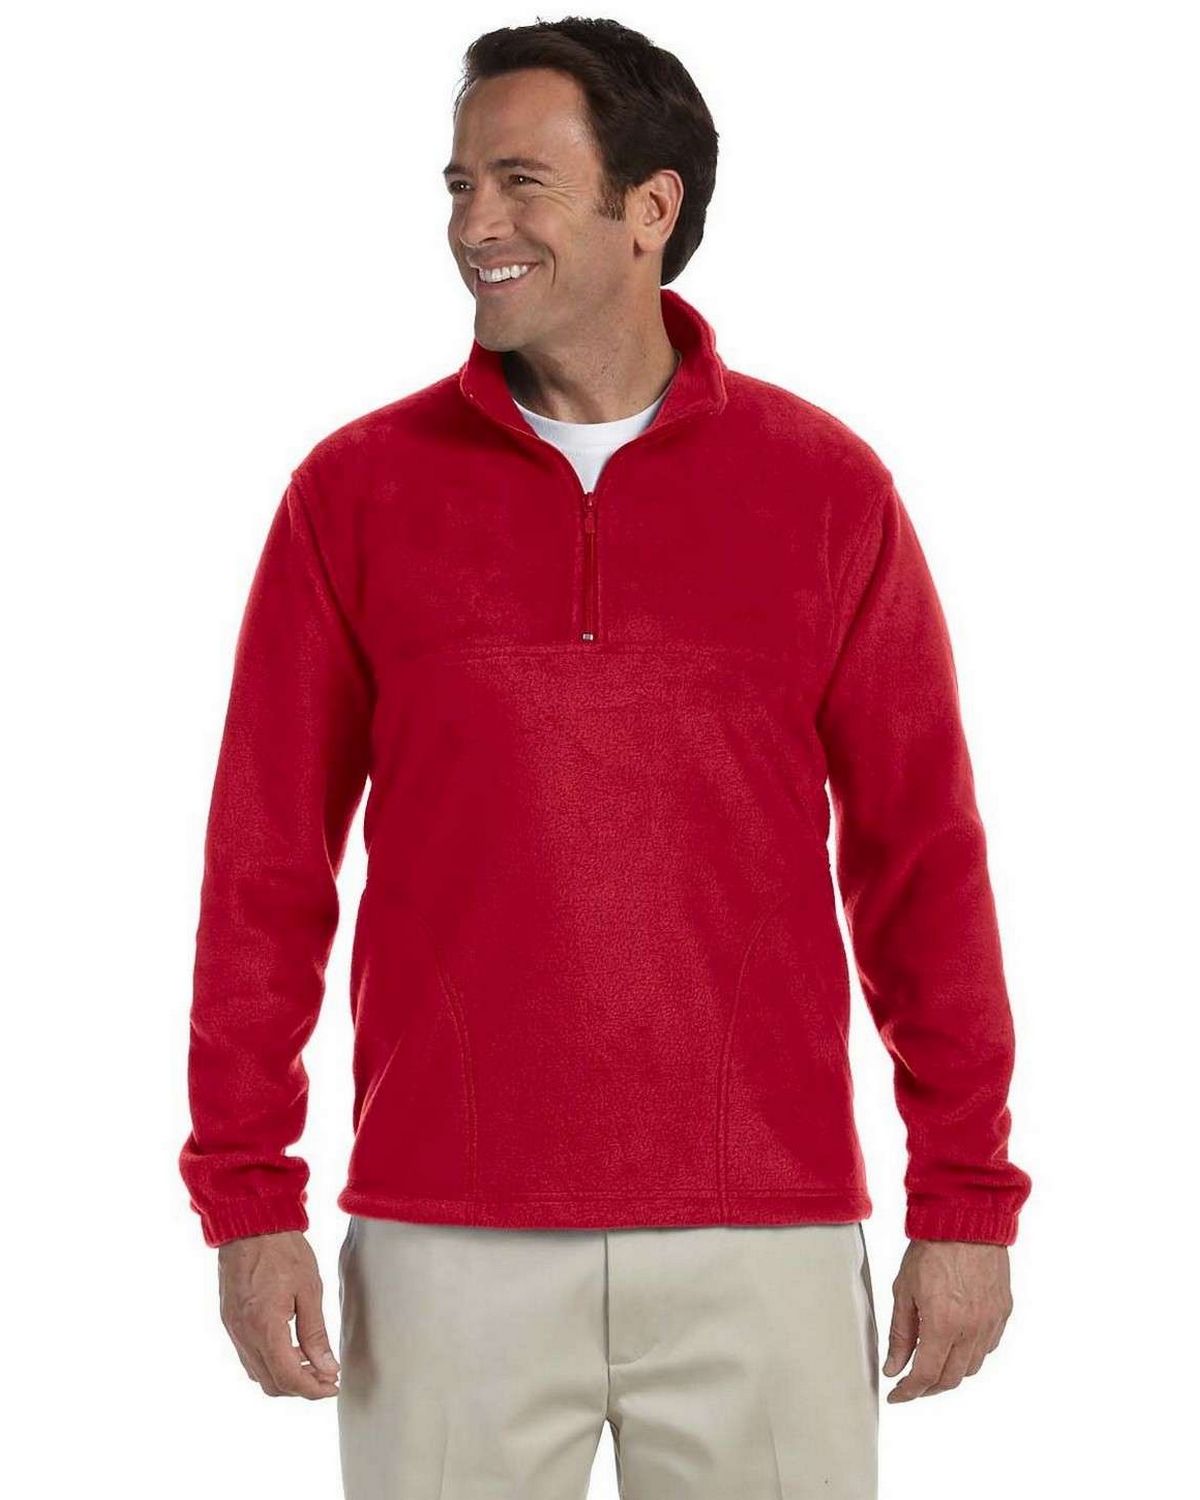 Harriton Men's 8 oz. Full-Zip Fleece - CHARCOAL - S M990-simple at   Men's Clothing store: Fleece Outerwear Jackets